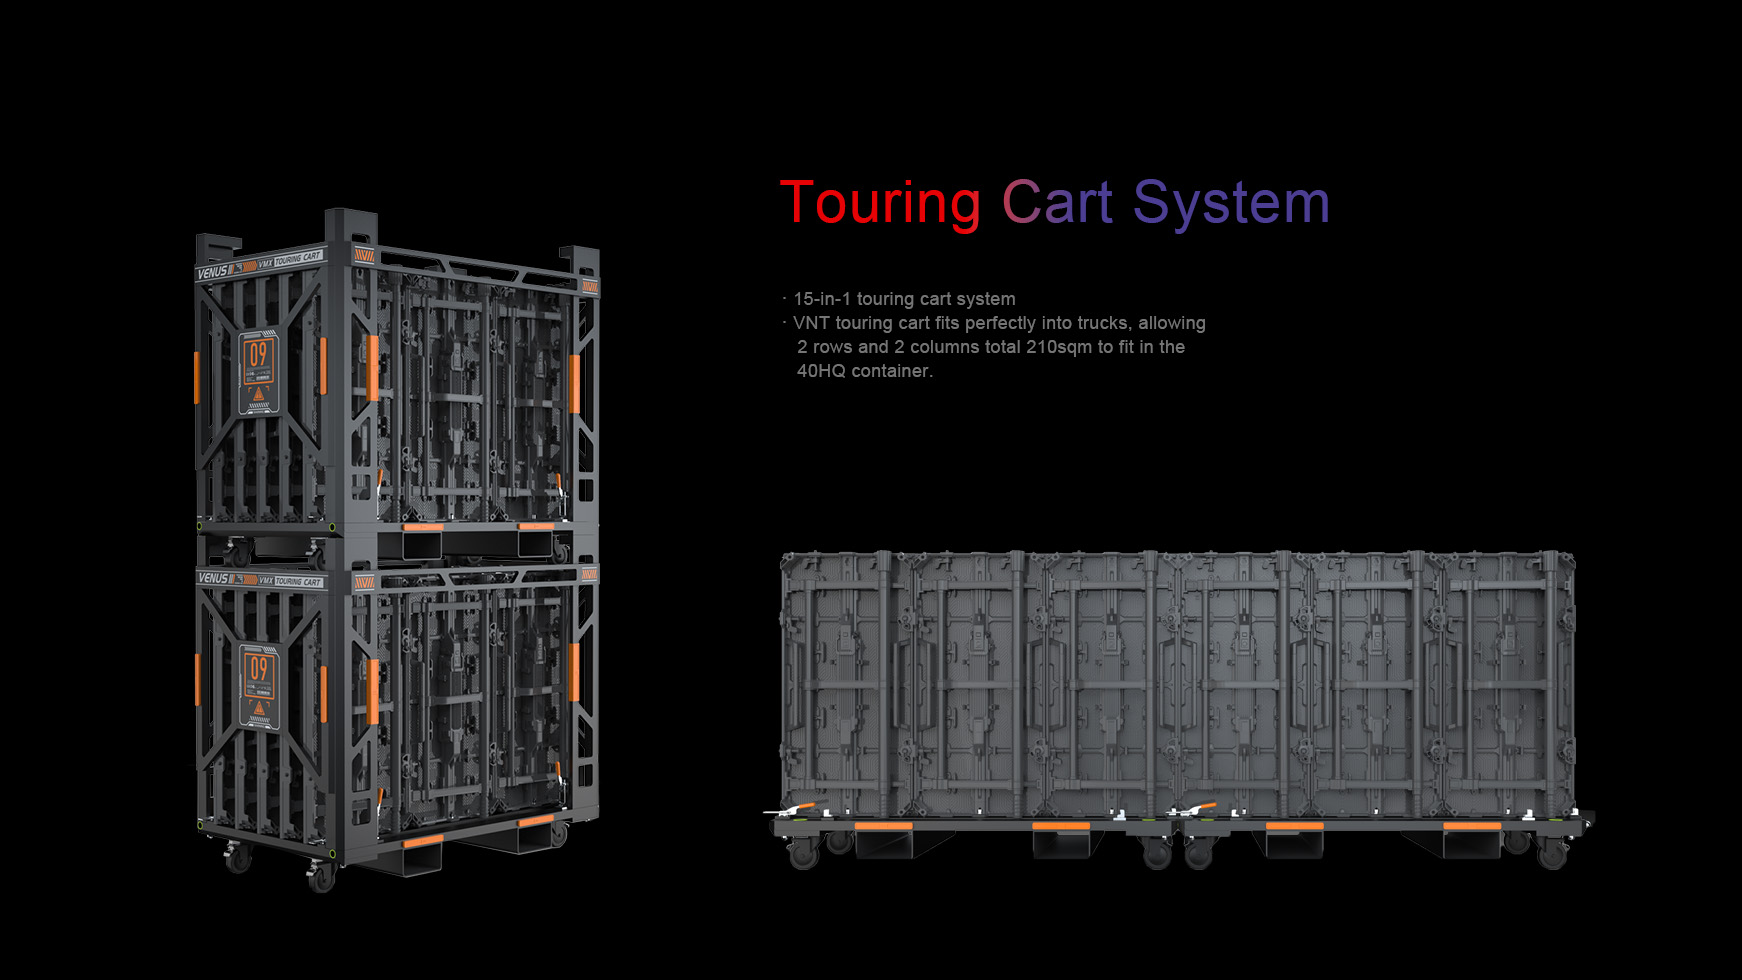 Touring cart system